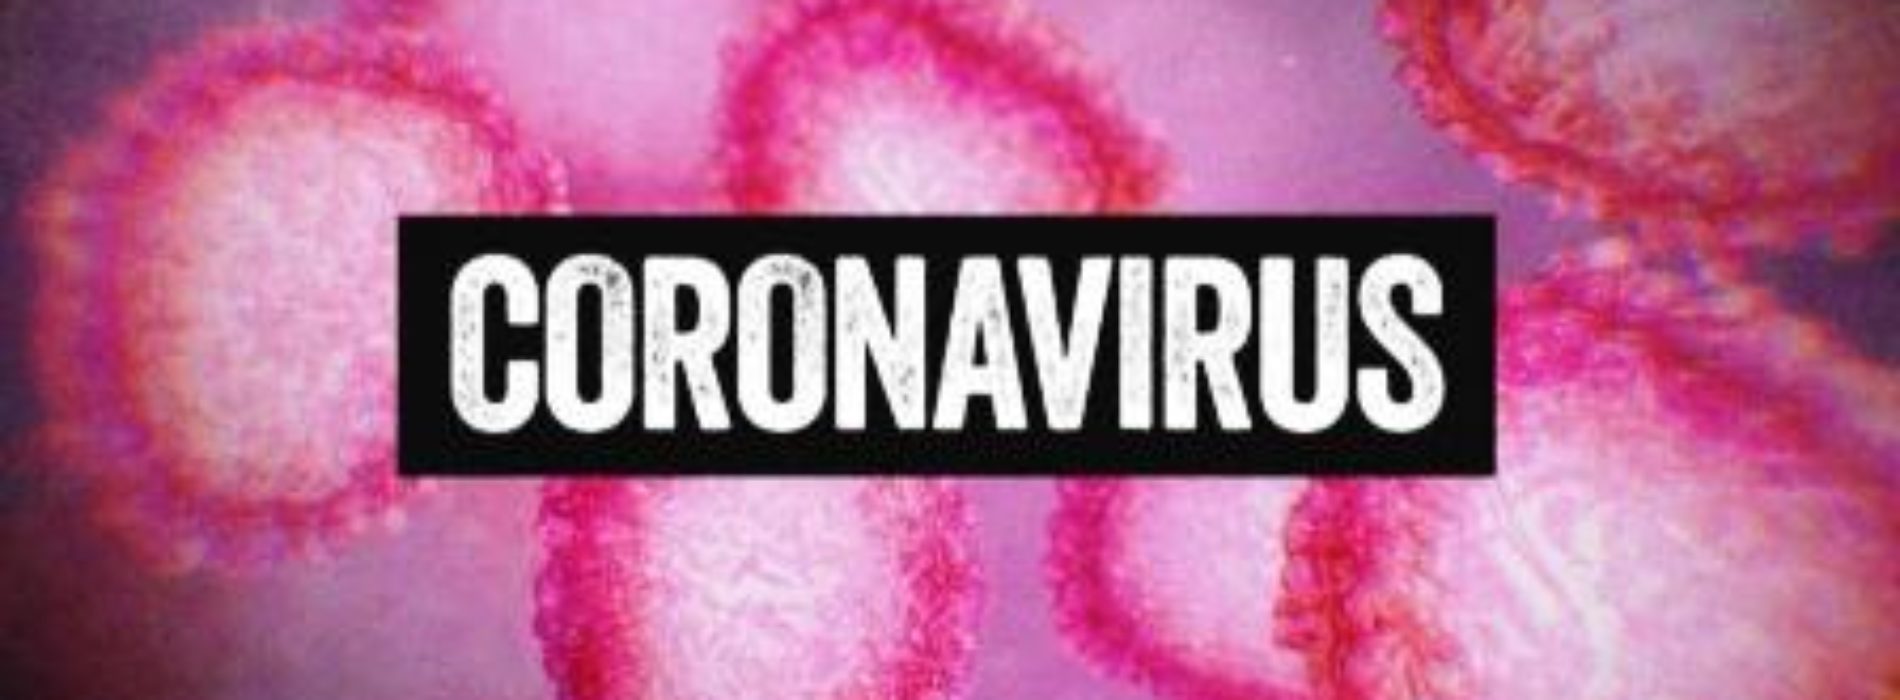 Nigeria confirms first Coronavirus case